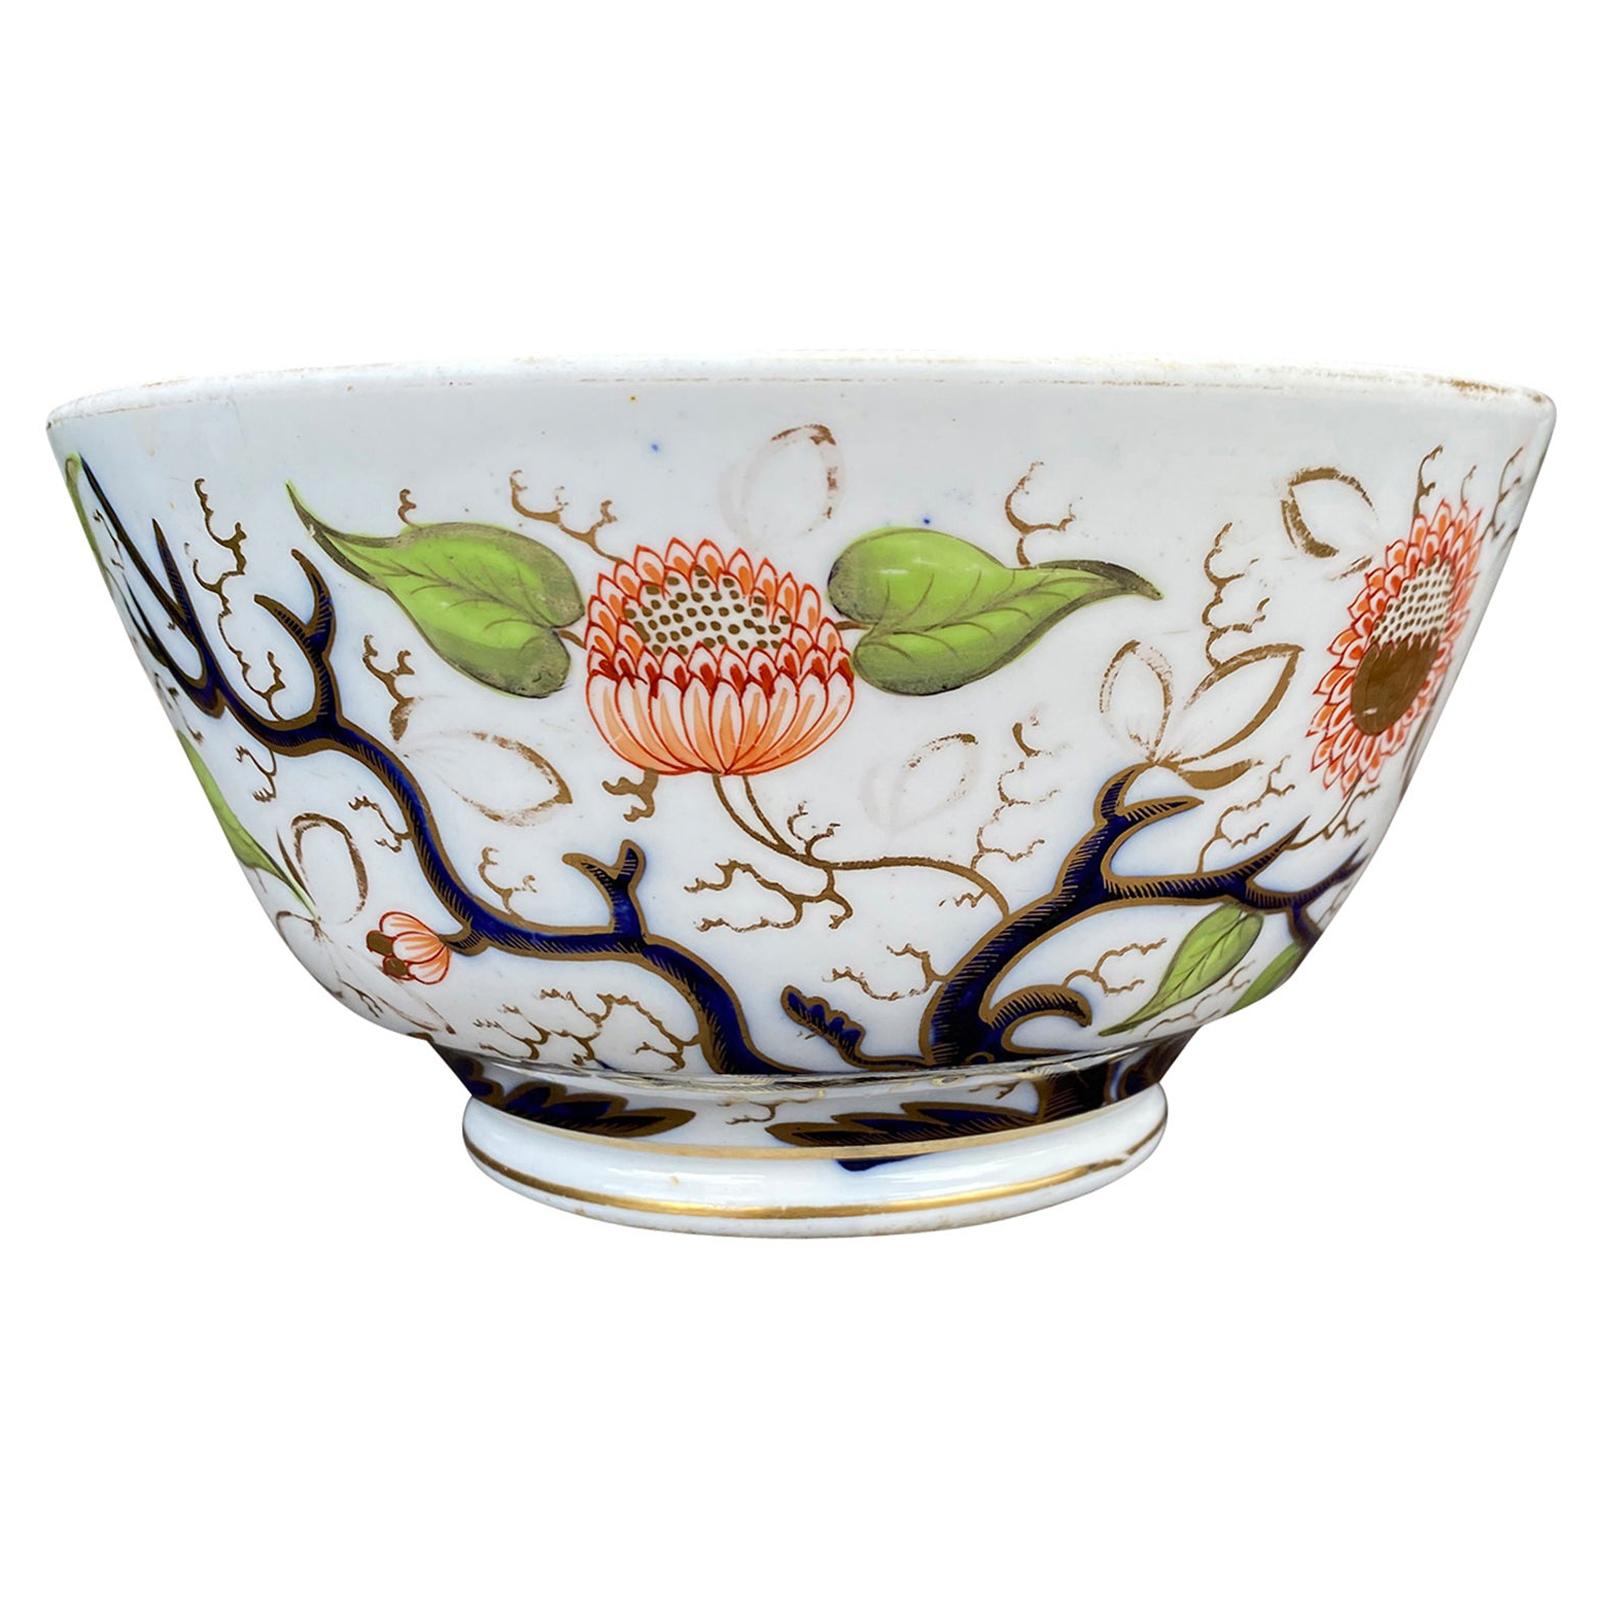 Circa 1810 English Coalport Porcelain Bowl, Marked 1261